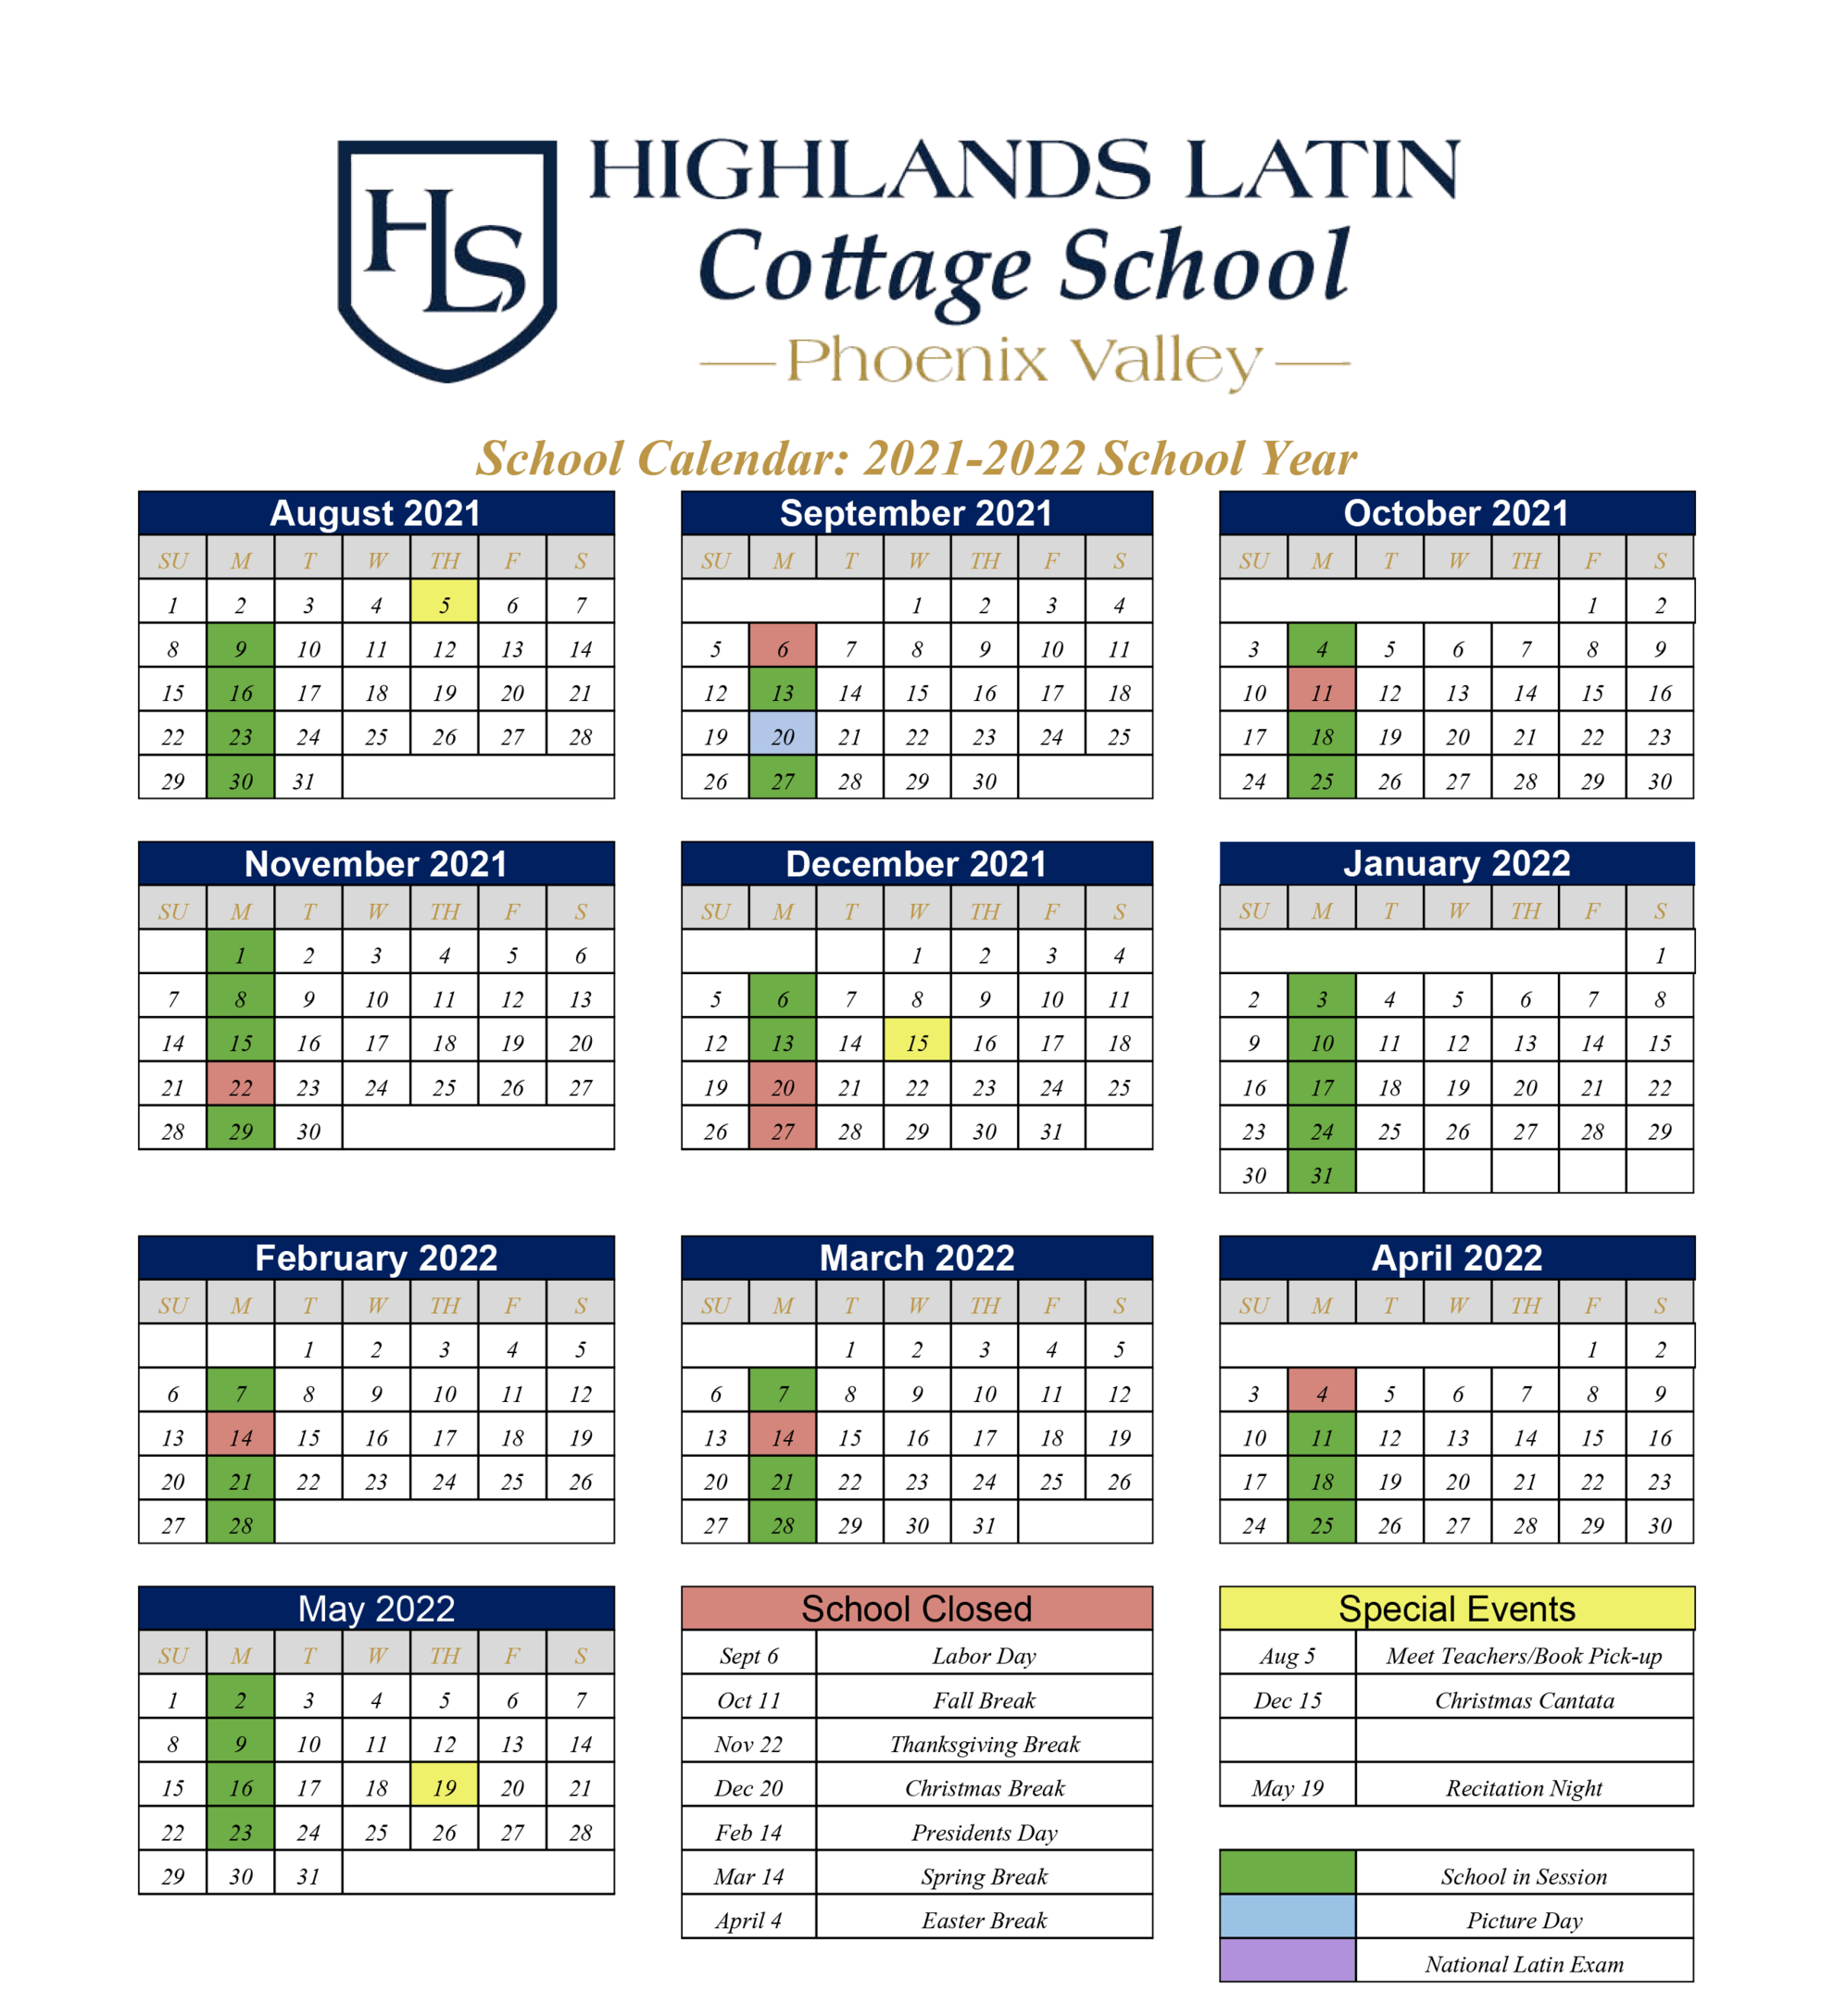 Highlands Latin Cottage School Phoenix Valley 2021 2022 School Calendar